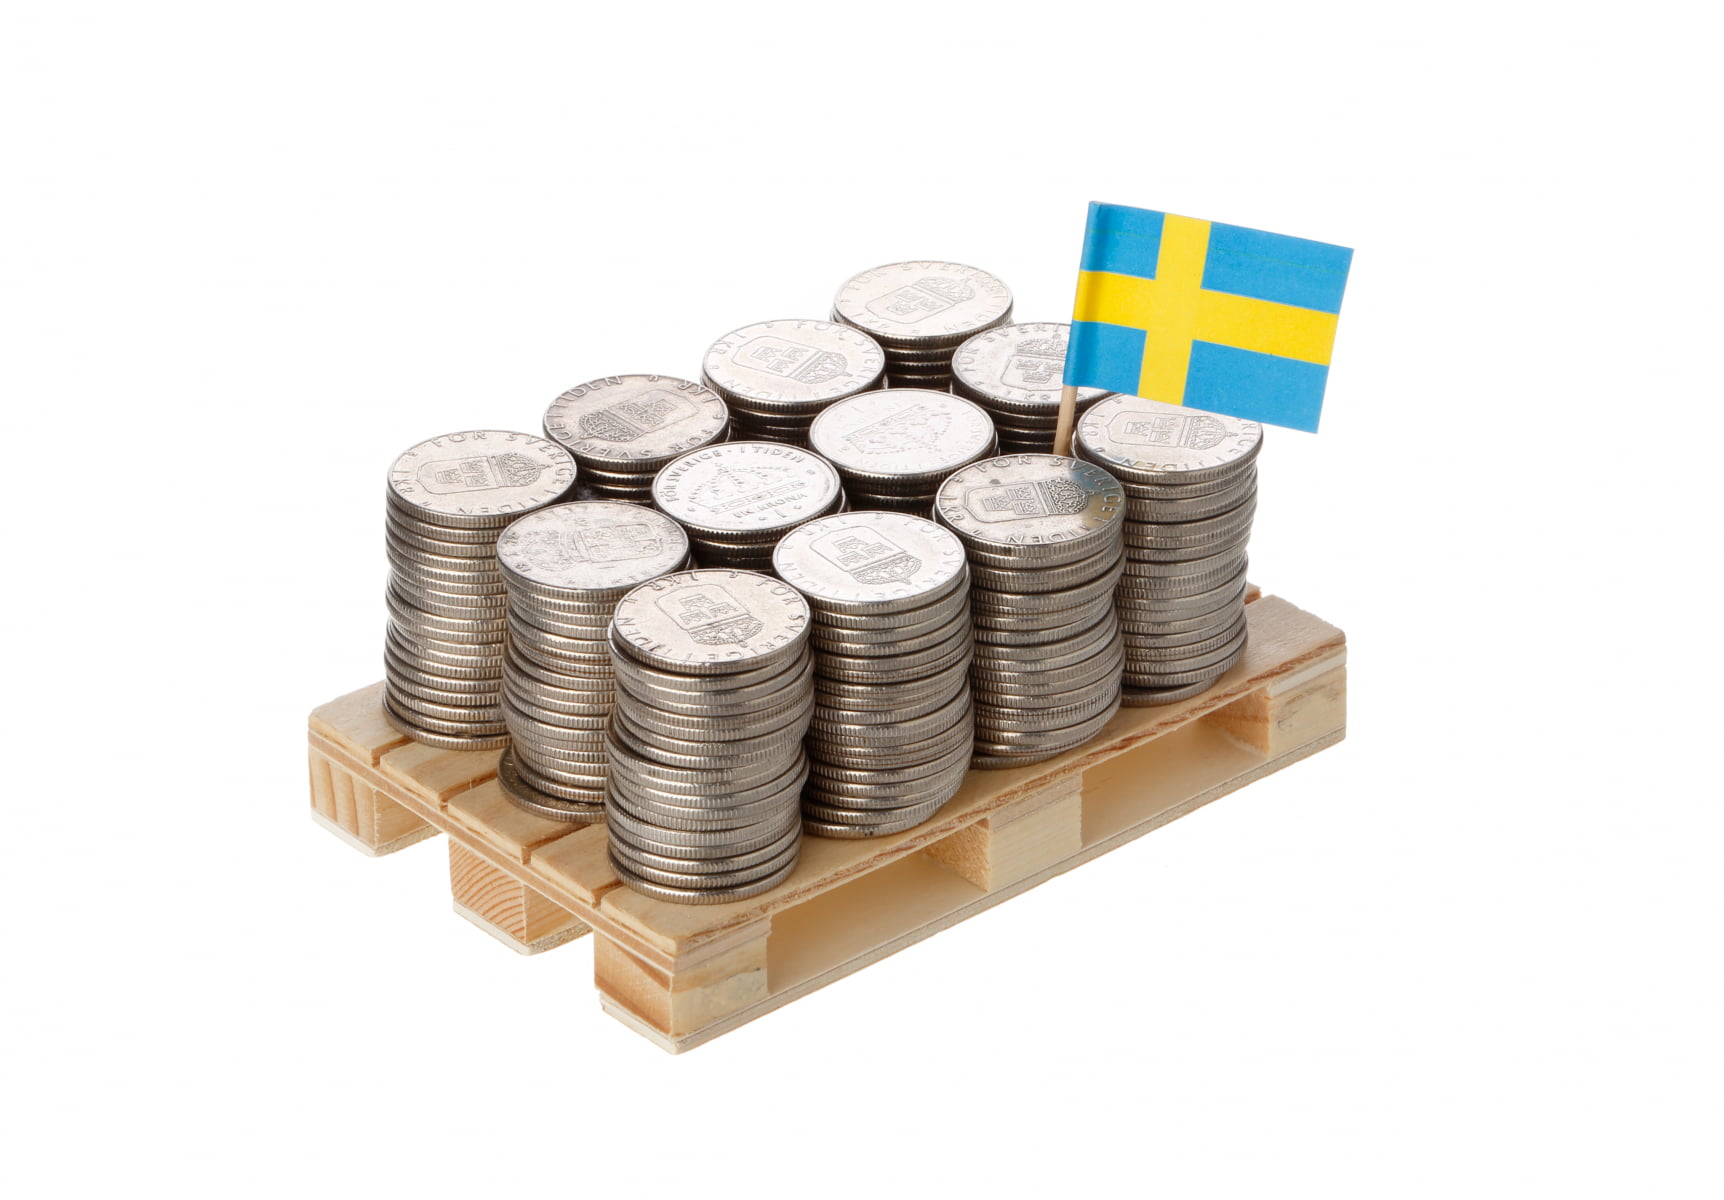 16304601-svensk-ekonomi-star-pall